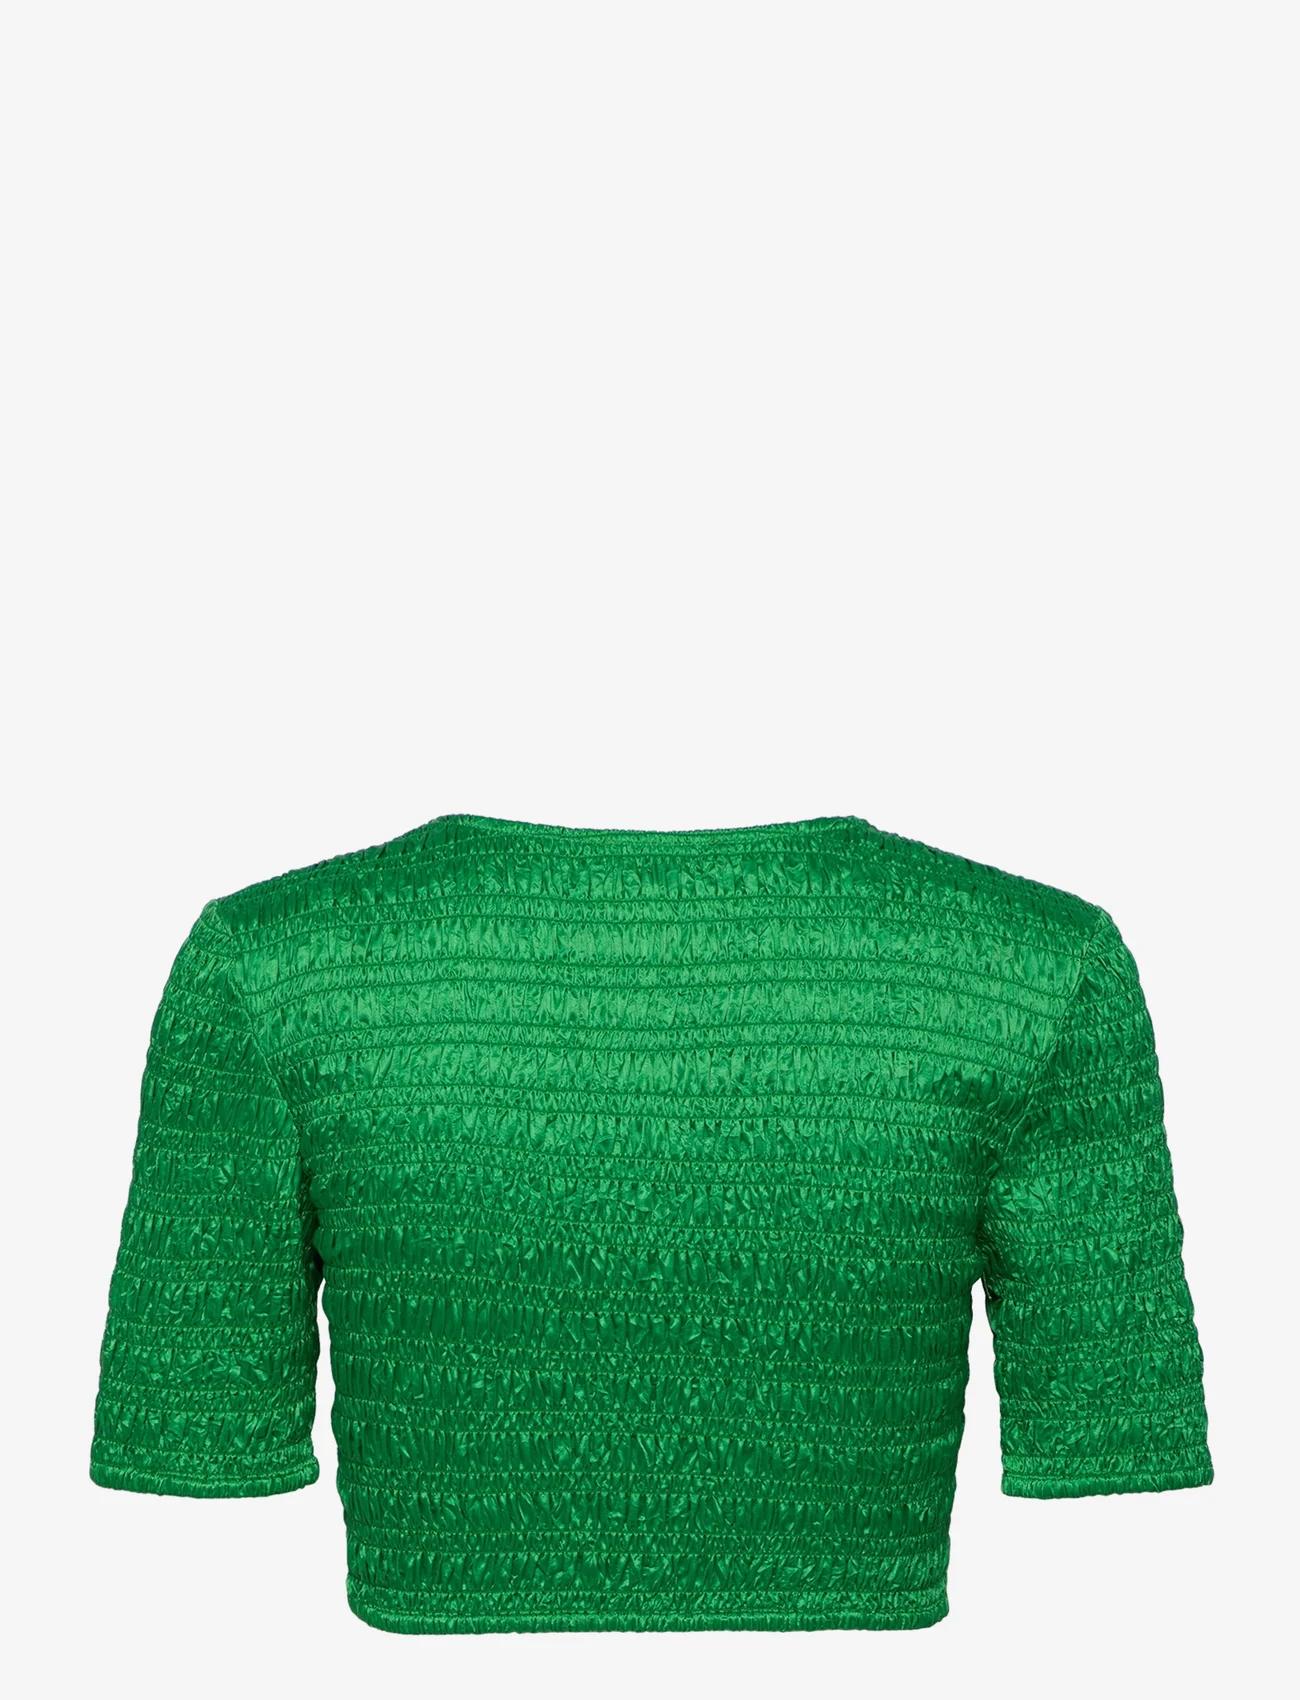 Ganni - Crinkled Satin - t-shirt & tops - bright green - 1